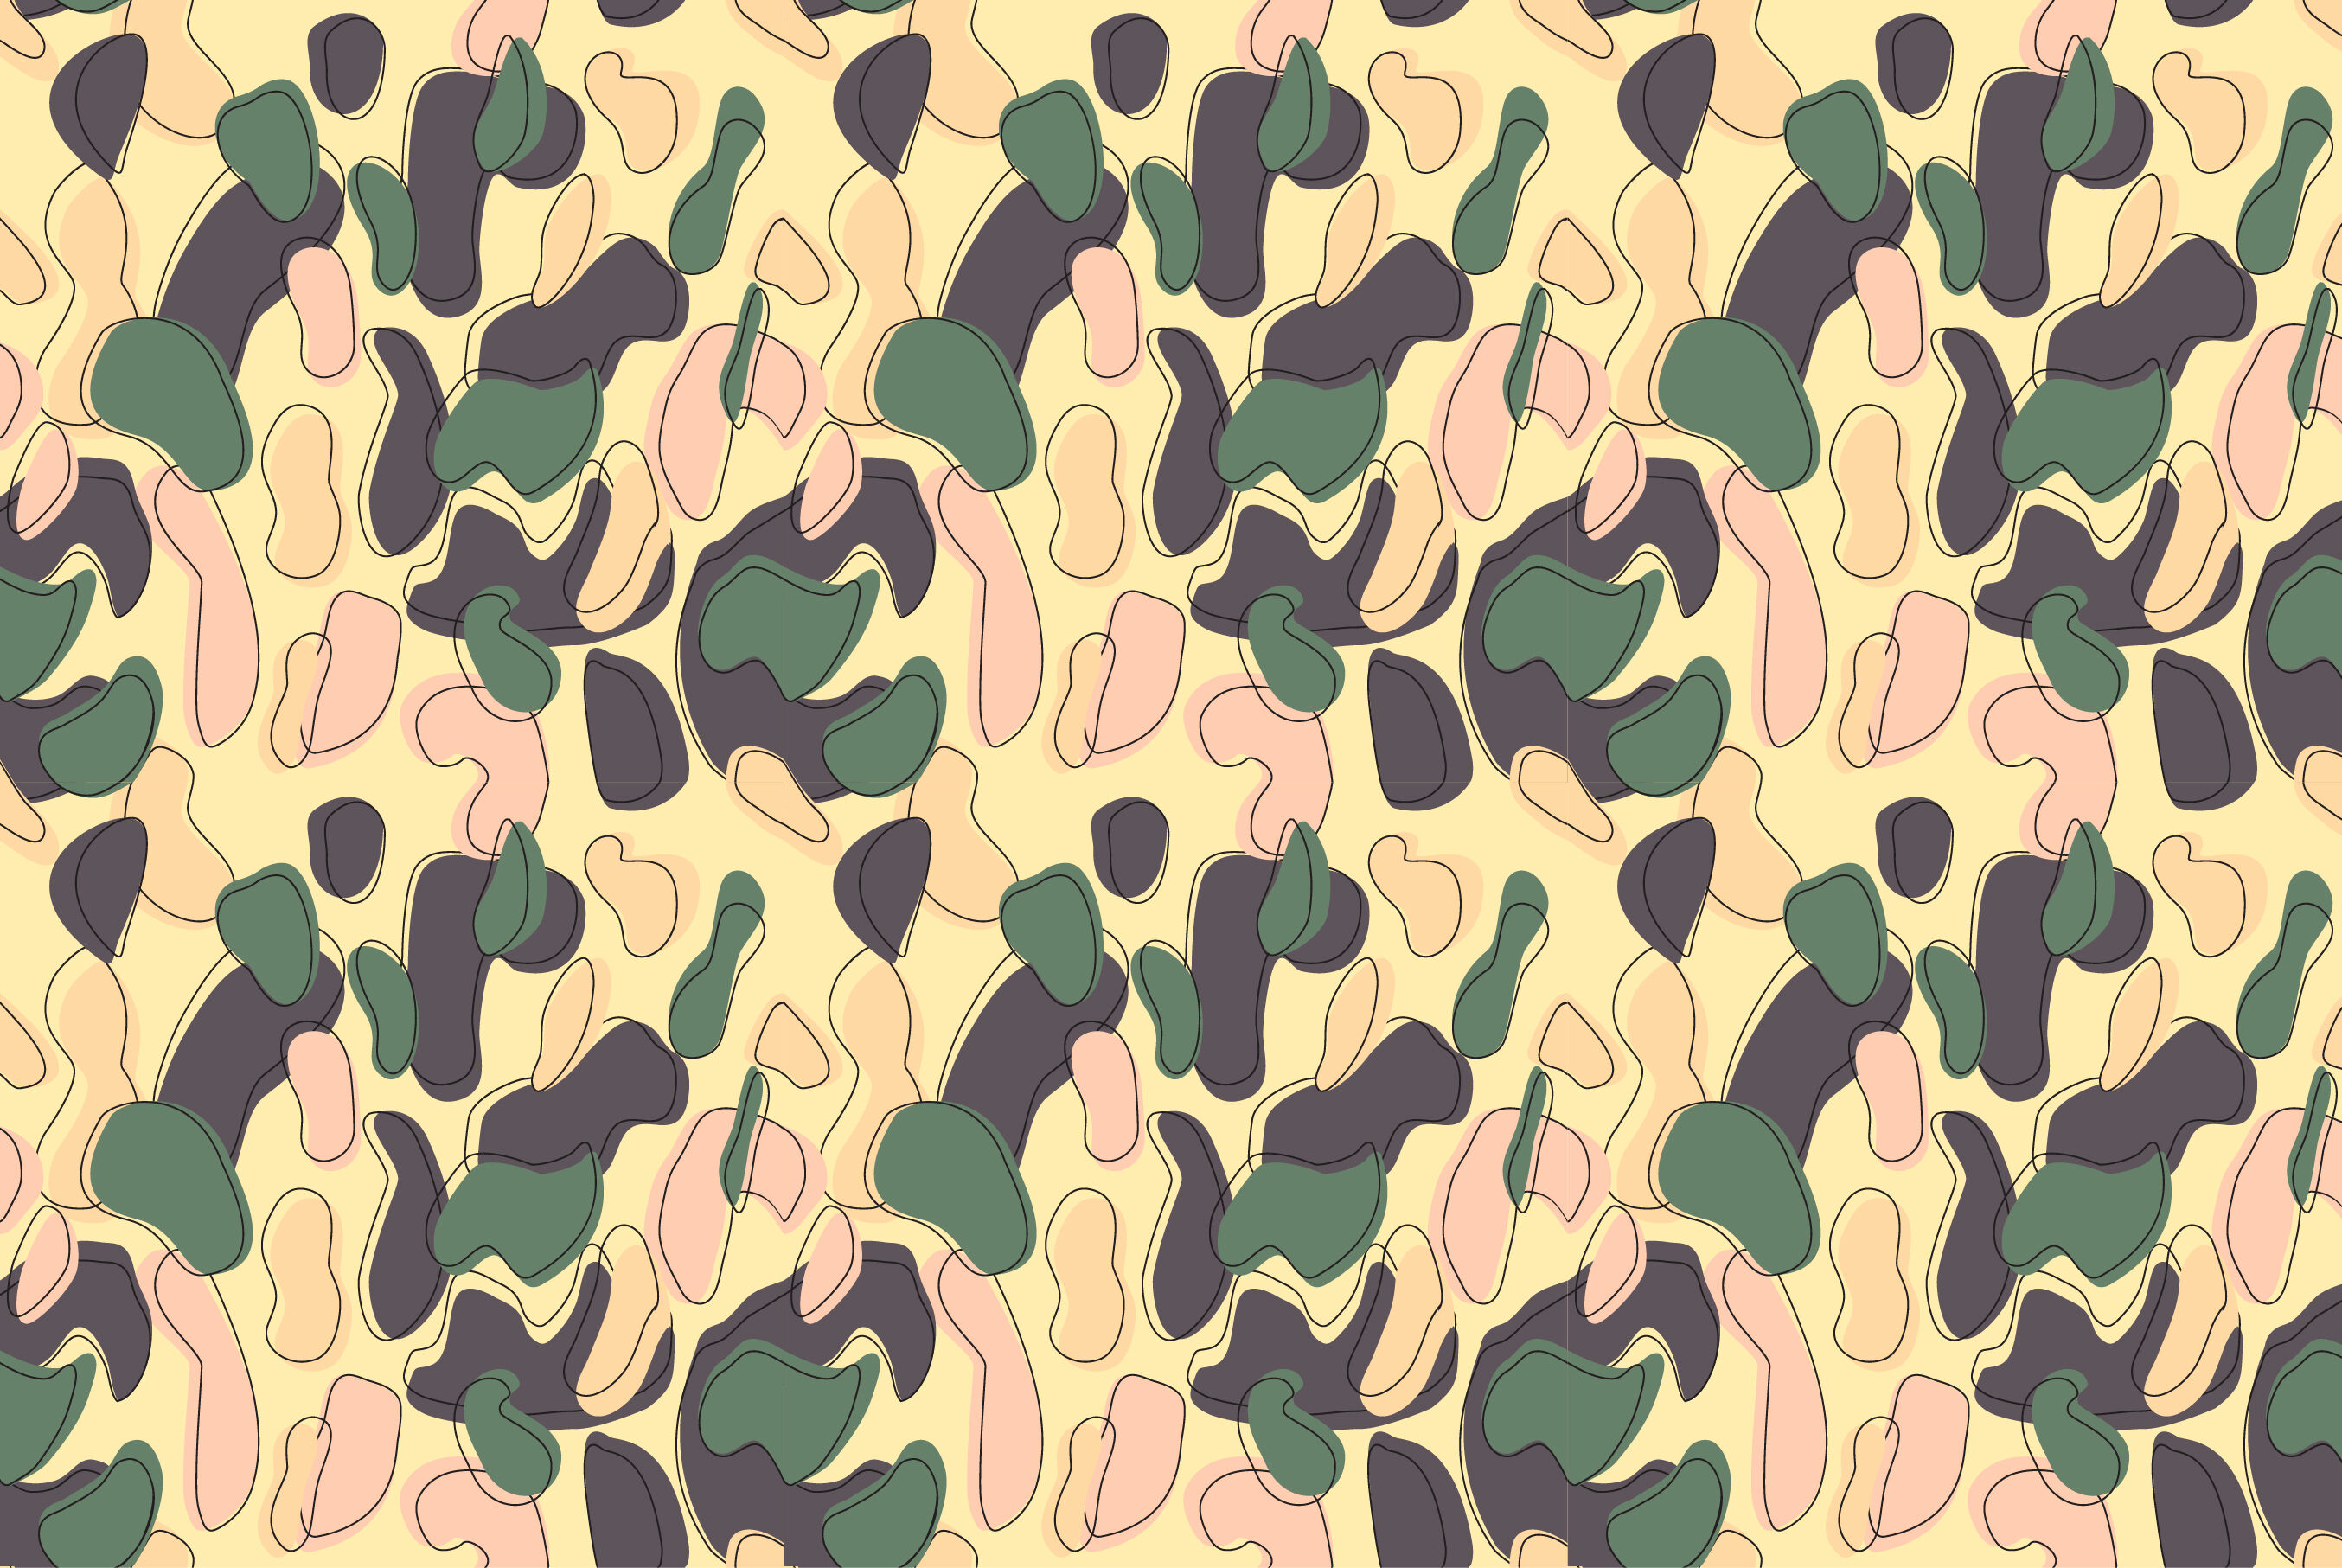 Camouflage pattern background seamless vector illustration. Modern